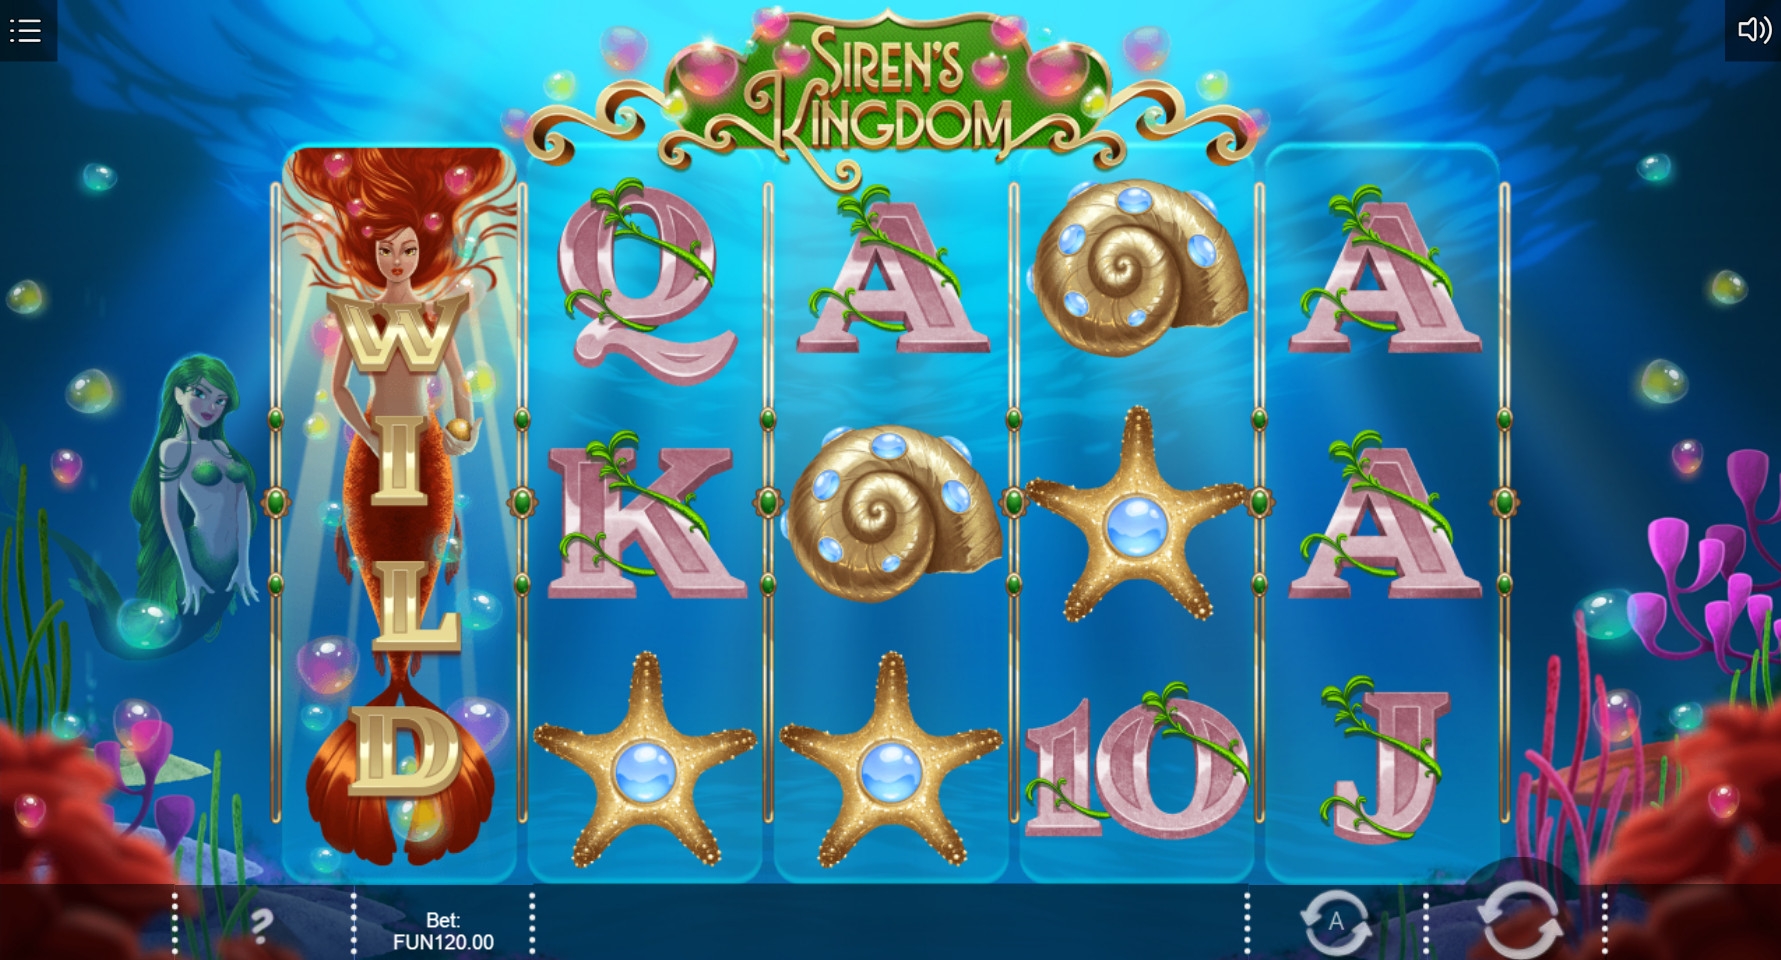 Siren’s Kingdom (Siren’s Kingdom) from category Slots